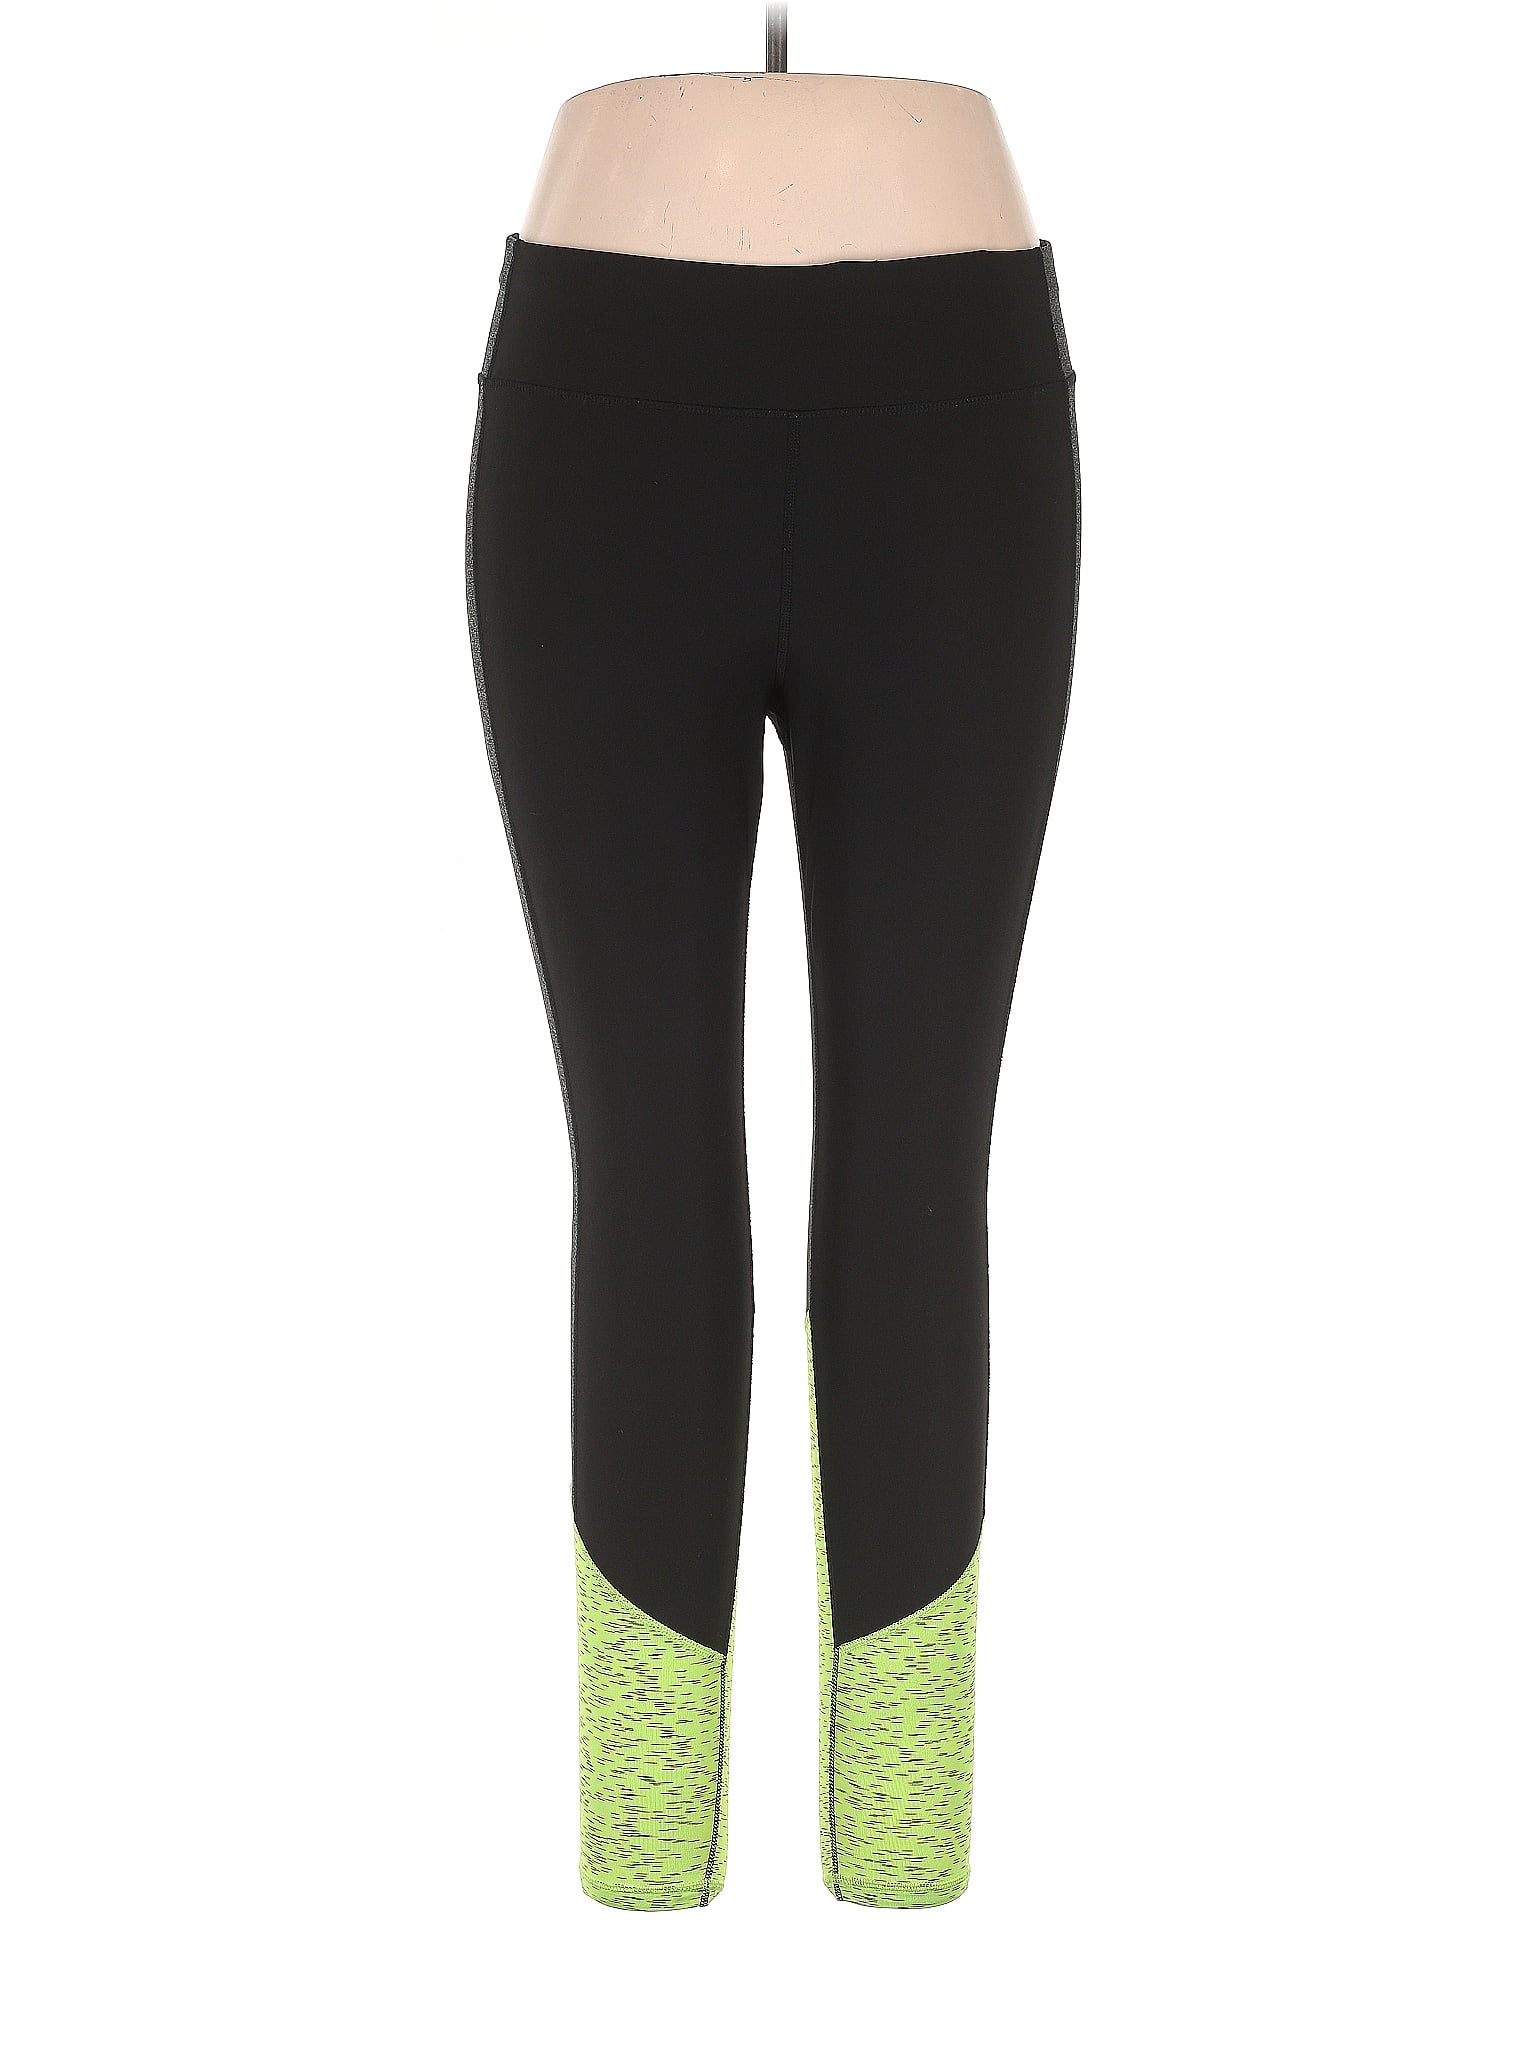 Xersion Black Green Leggings Size XL (Petite) - 47% off